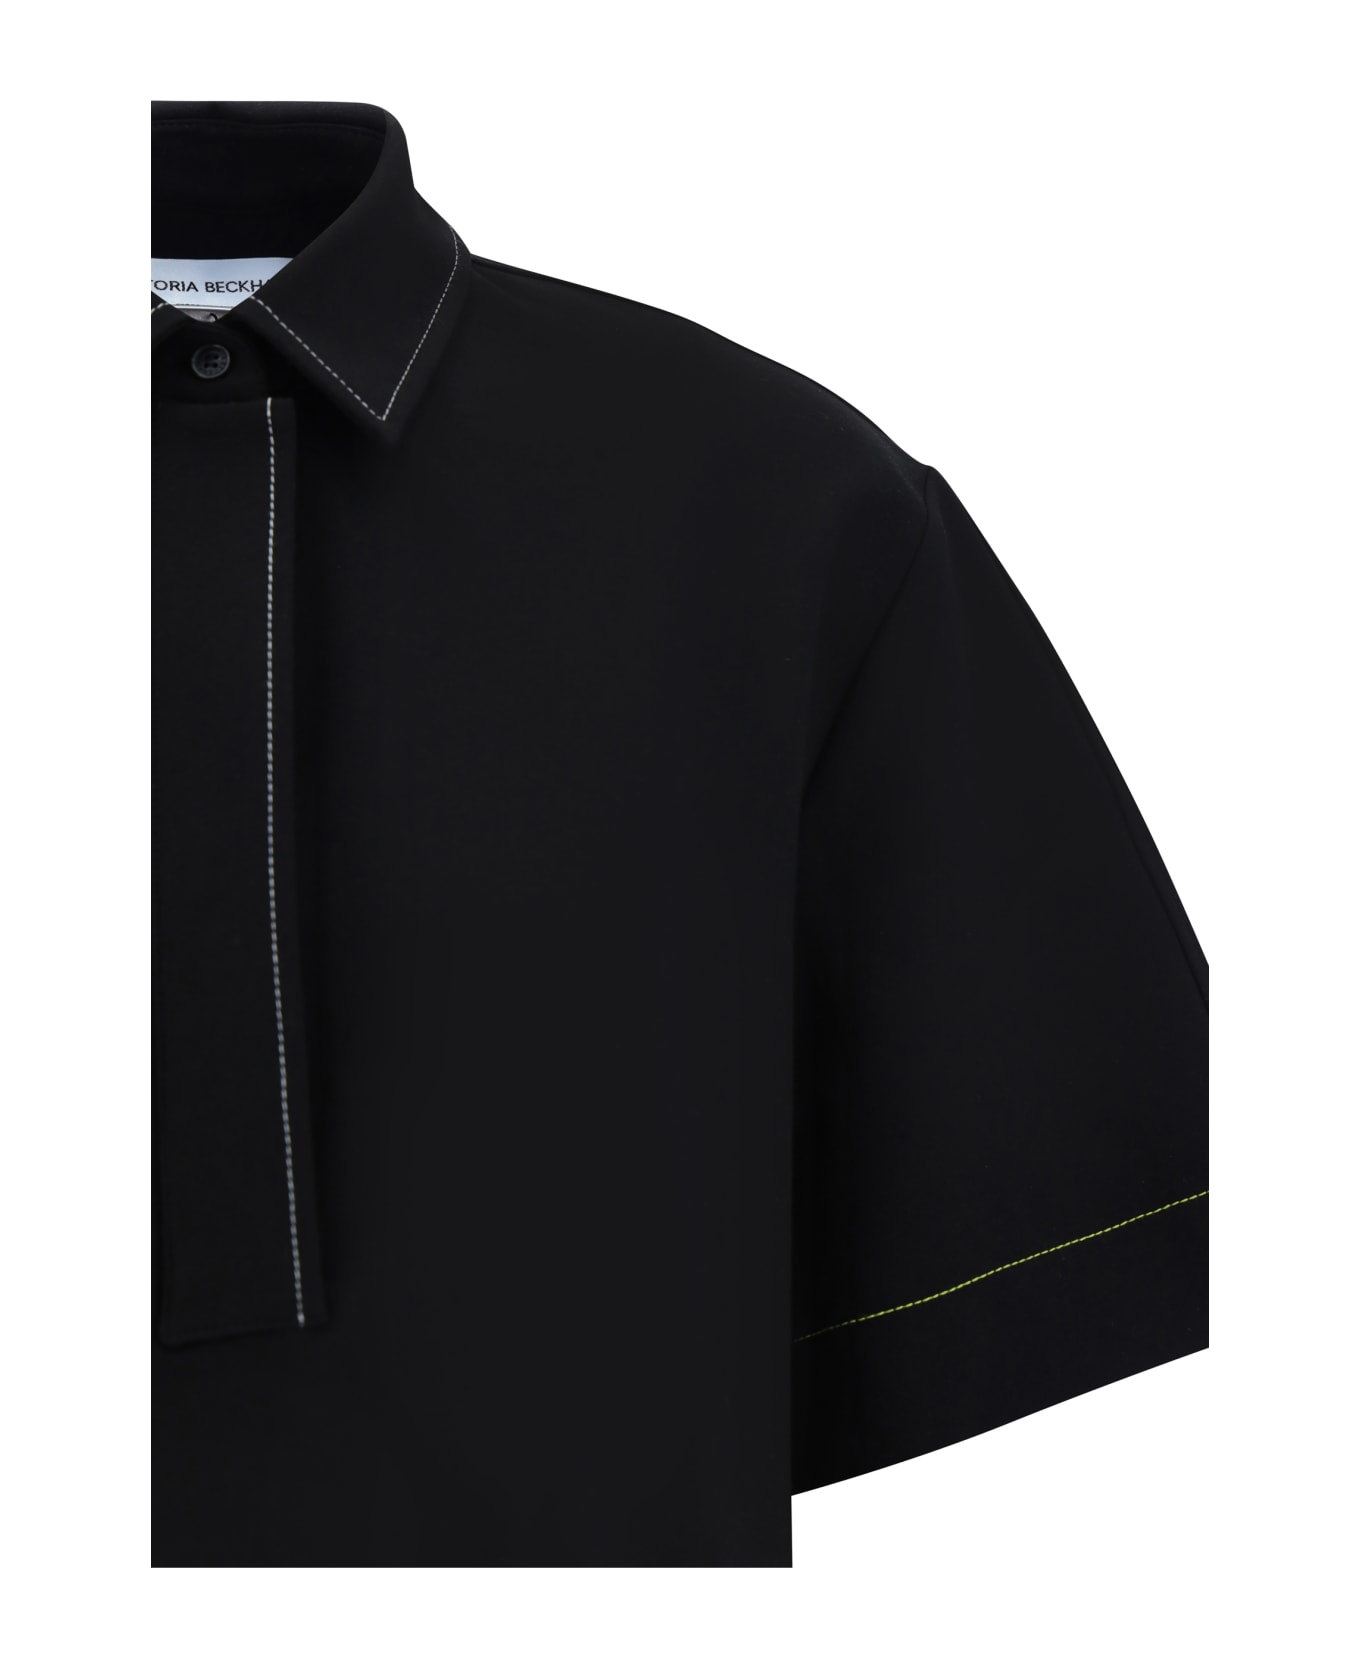 Victoria Beckham Polo Shirt - Black ポロシャツ